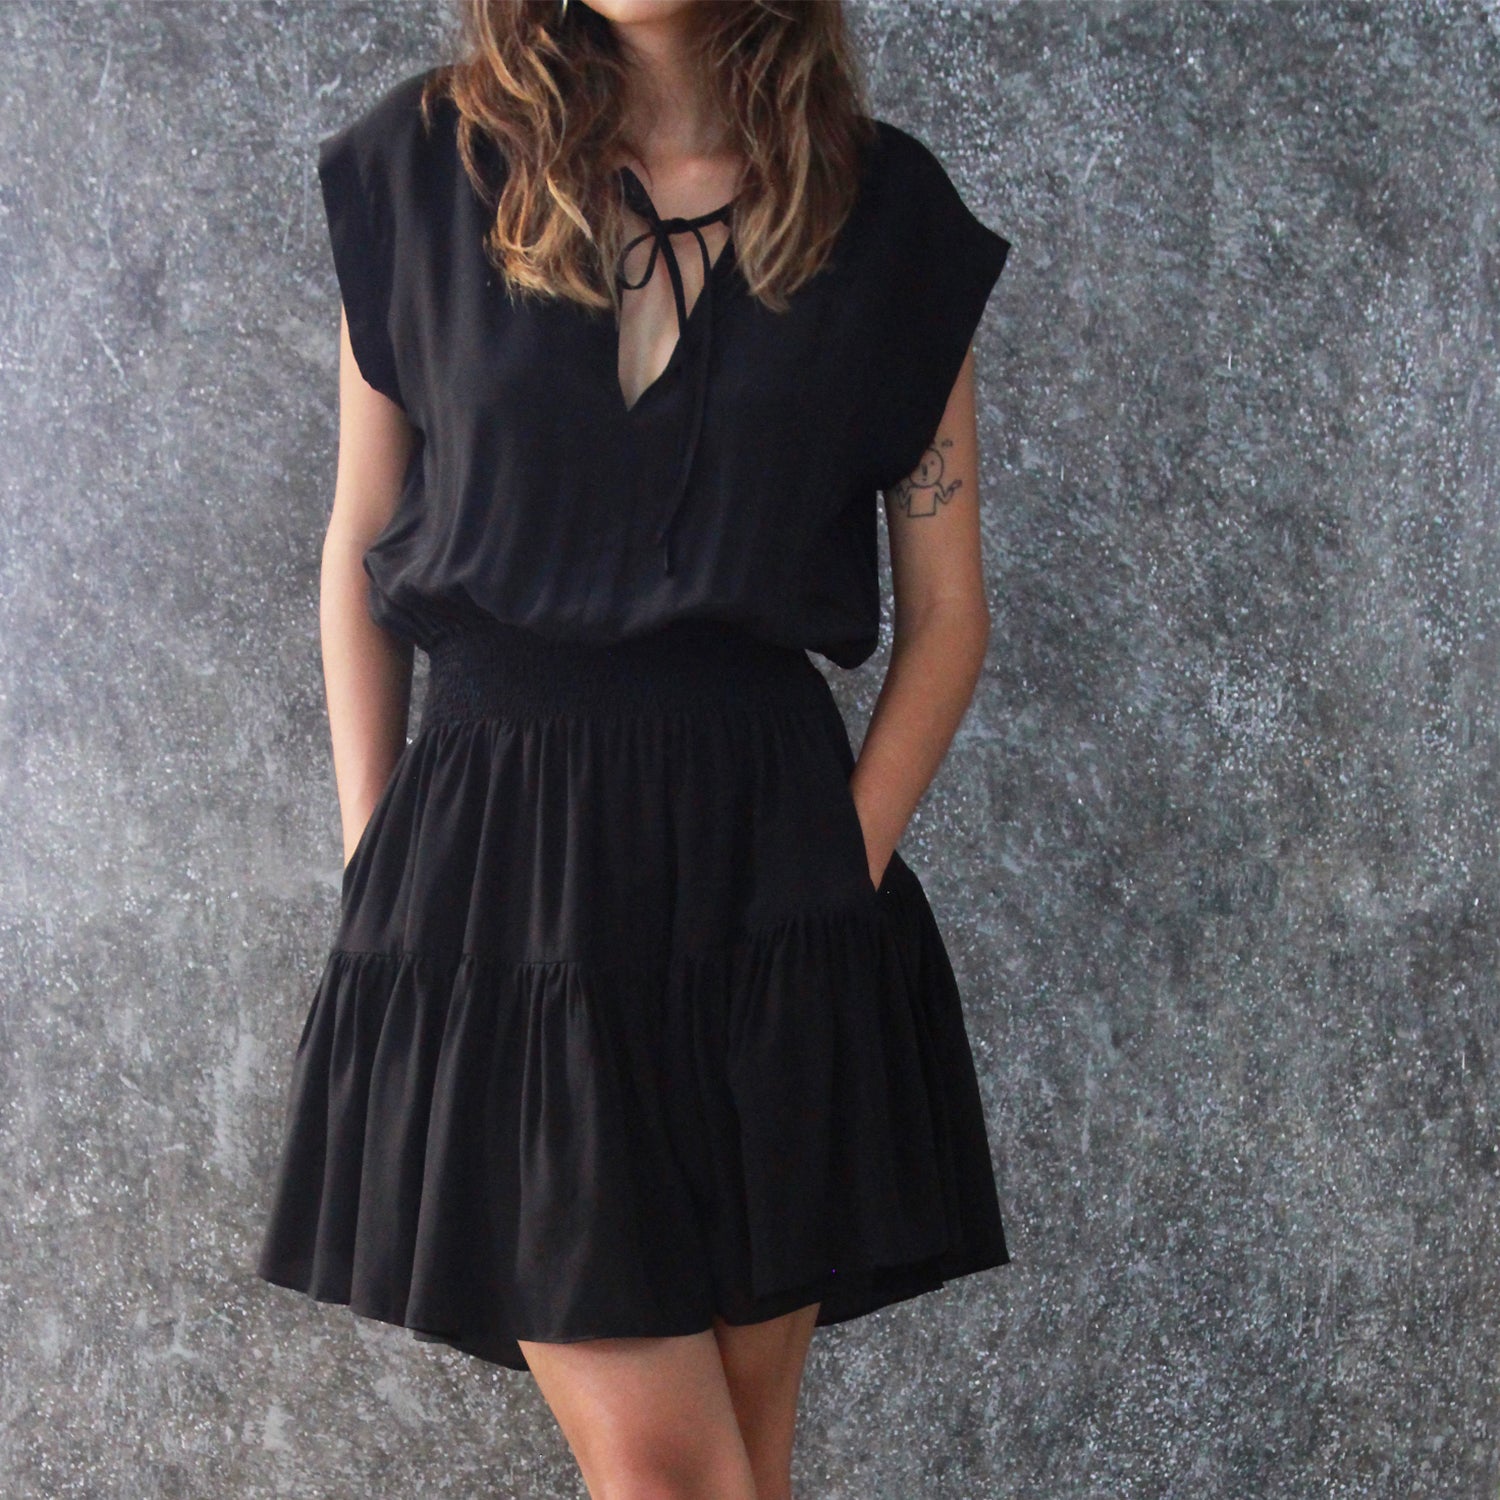 Shop ALICE Silk Short Dress by Gosia Orlowska